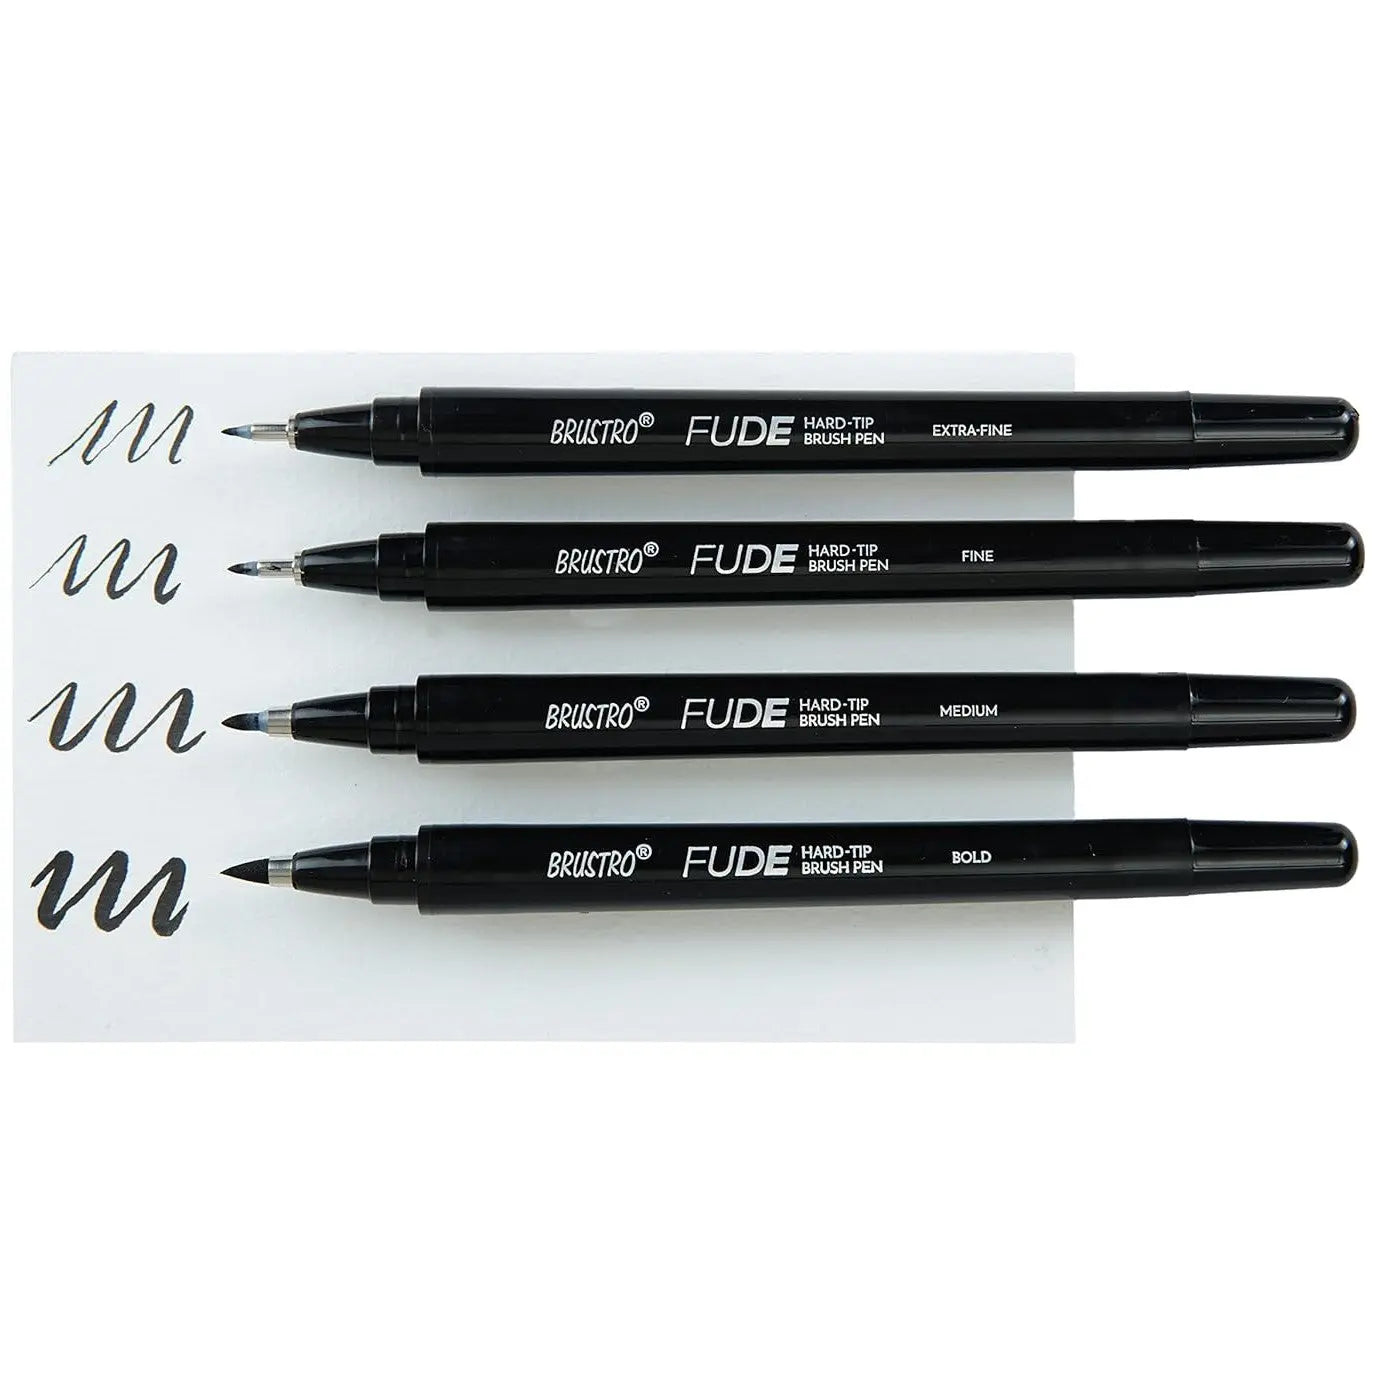 Brustro Fude Hard-Tip Brush Pen Black Ink Set of 4 Brustro